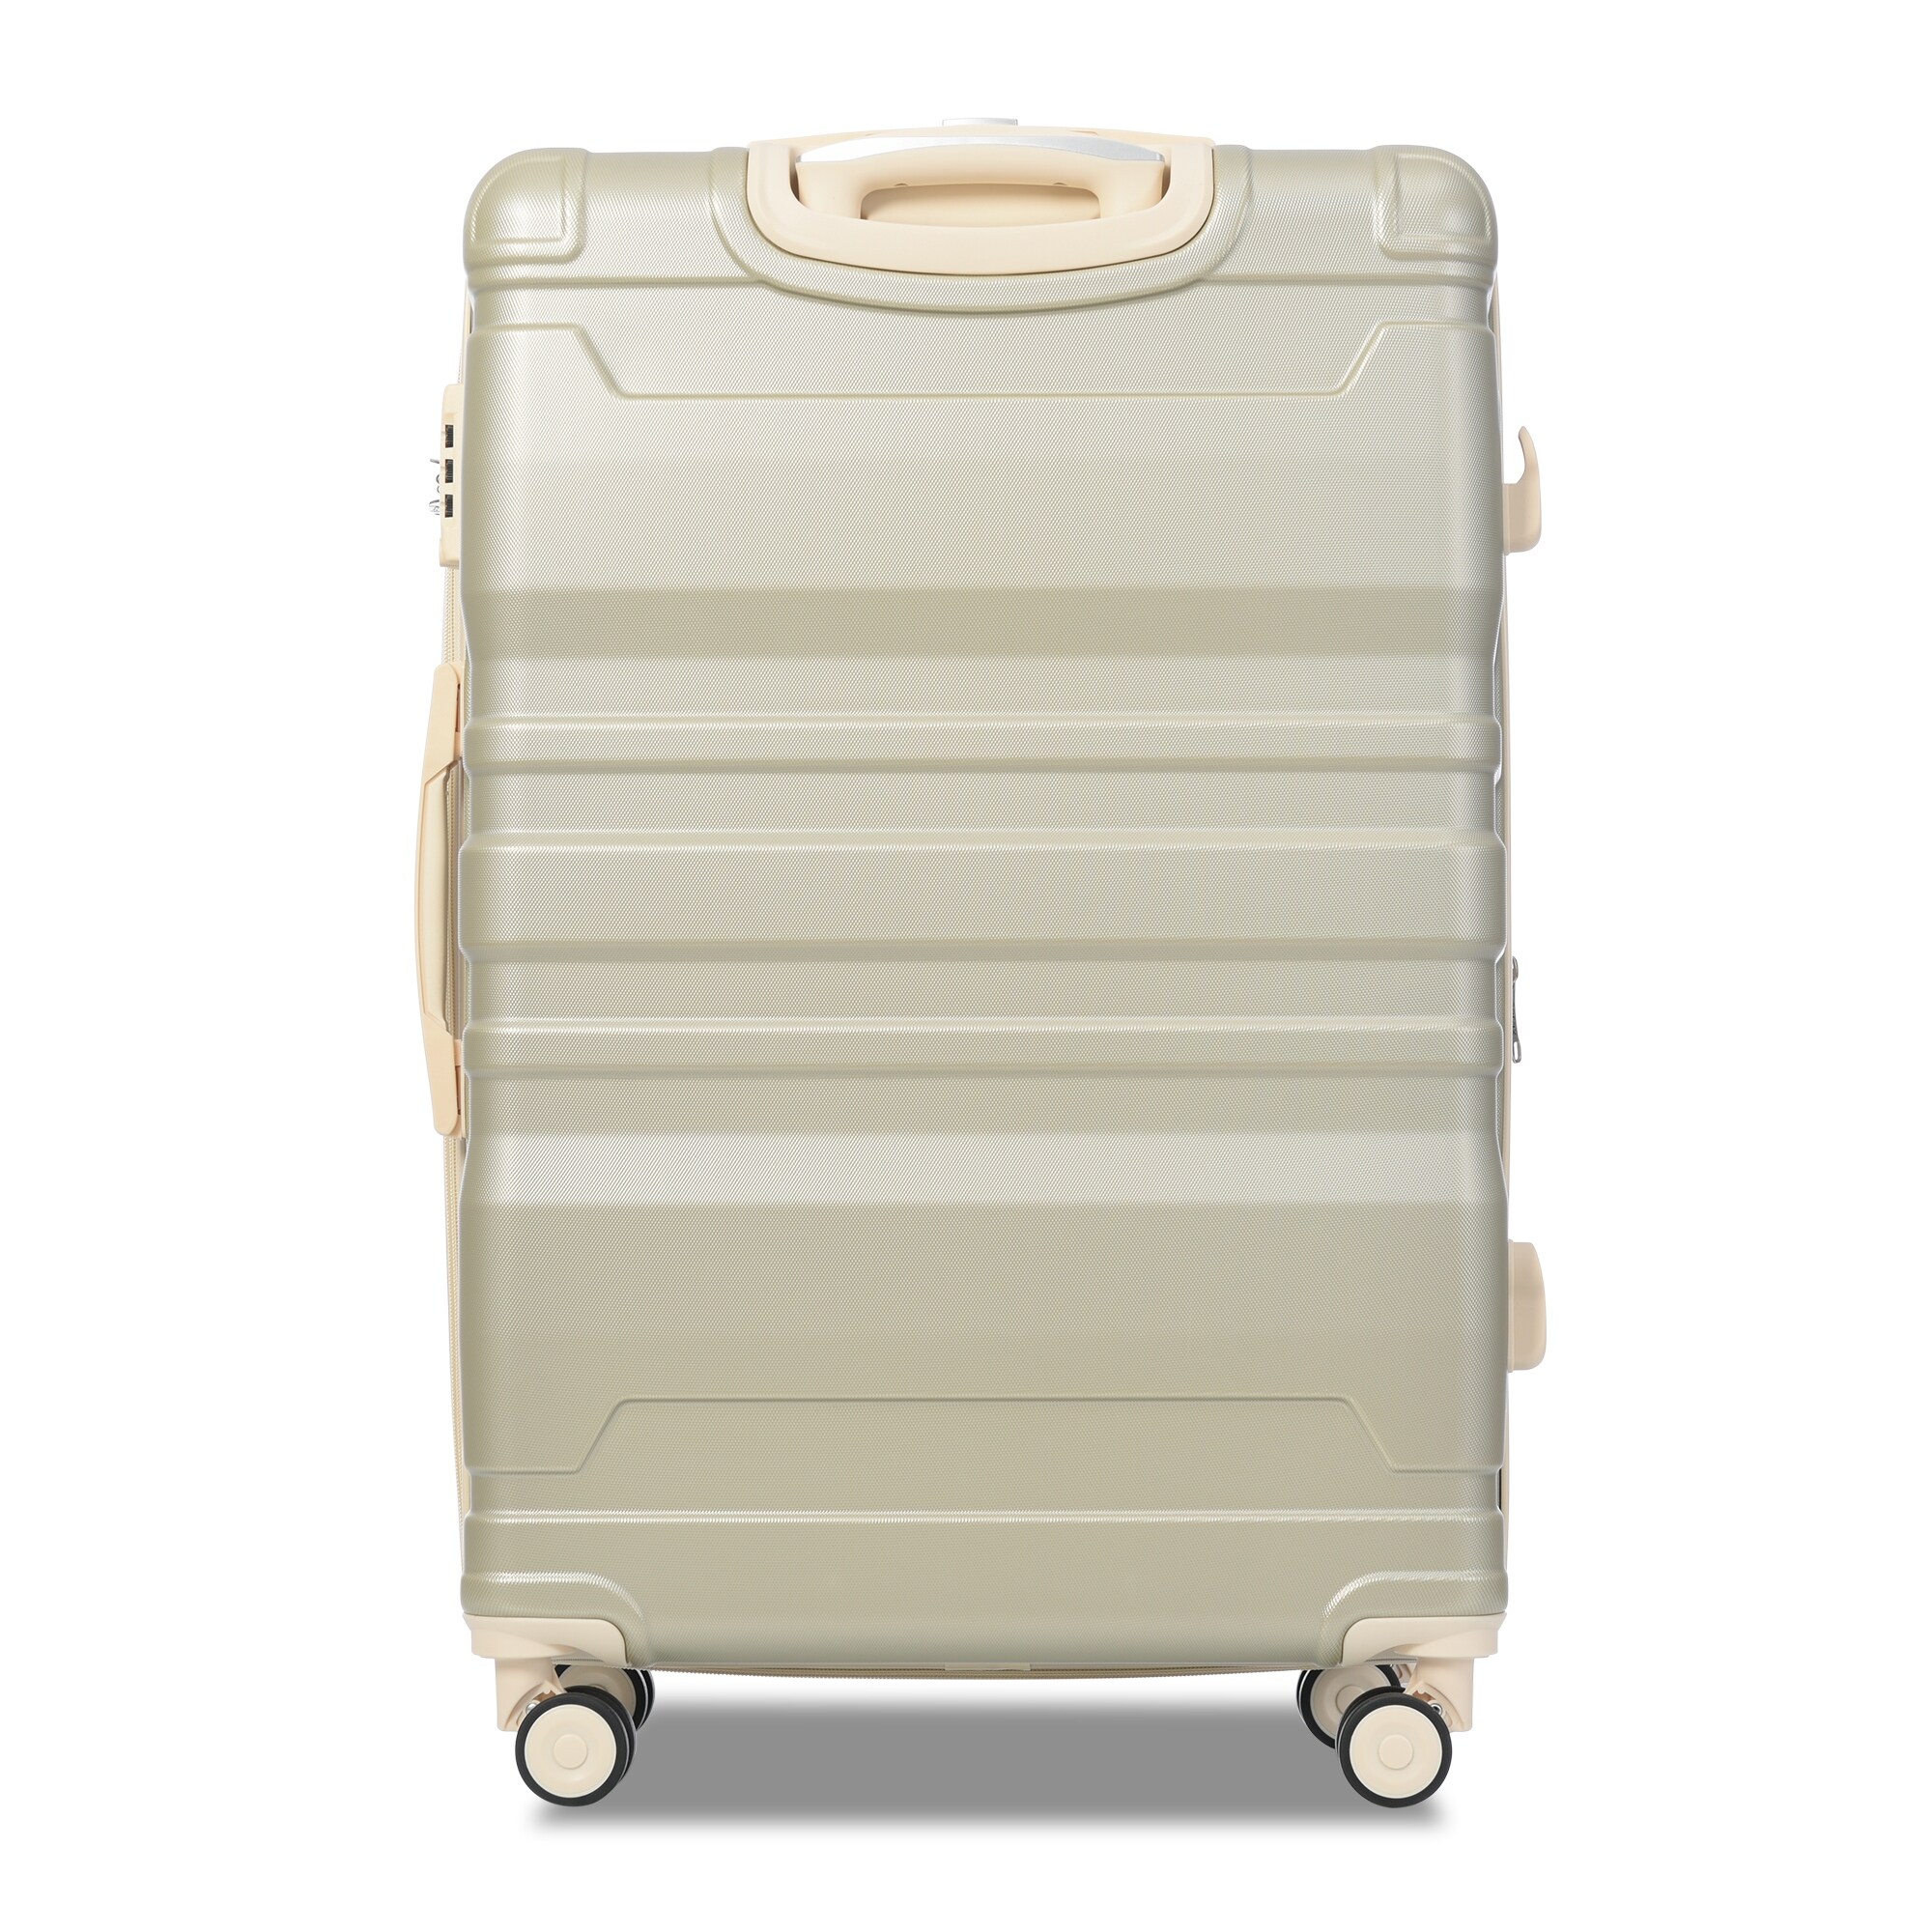 CALPAK 2 piece Trunk Luggage Set, Gold, Hard Case Spinner